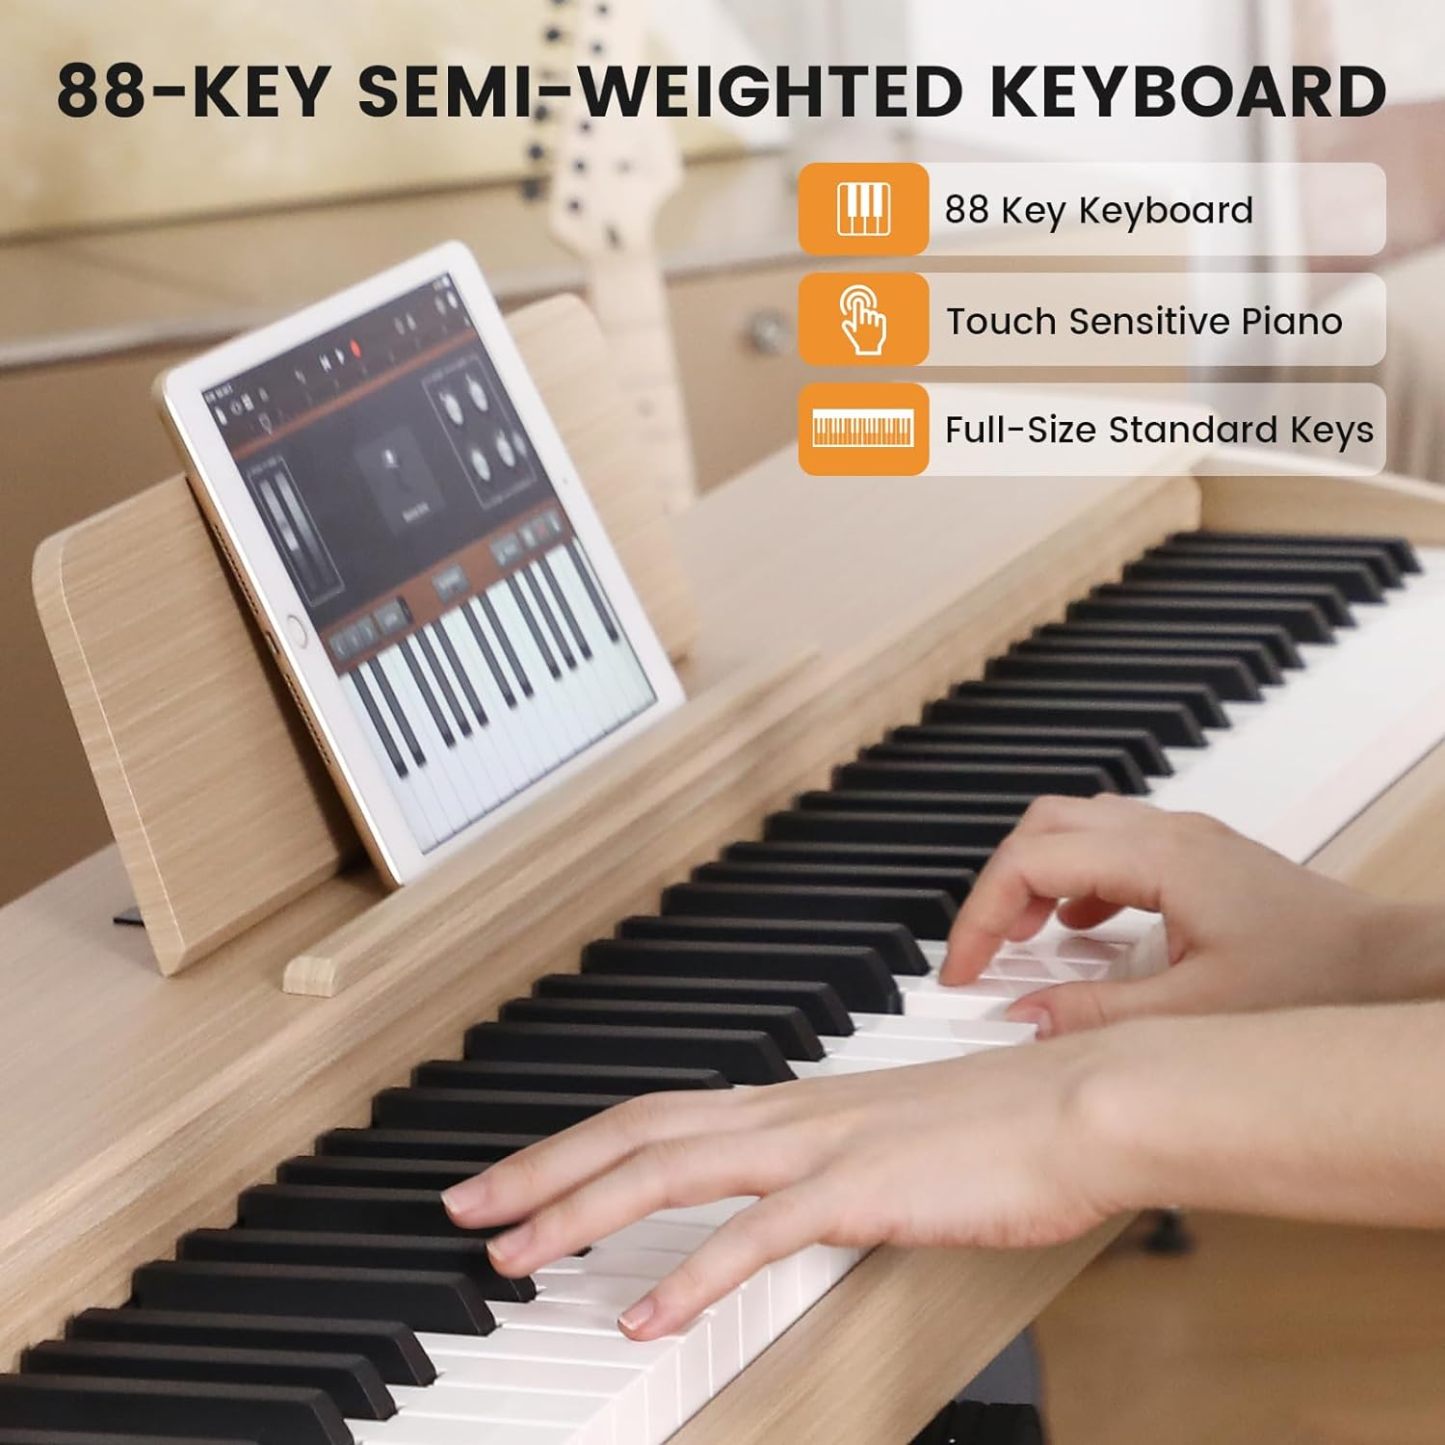 Fesley FEP660 Semi-Weighted Digital Piano Beige